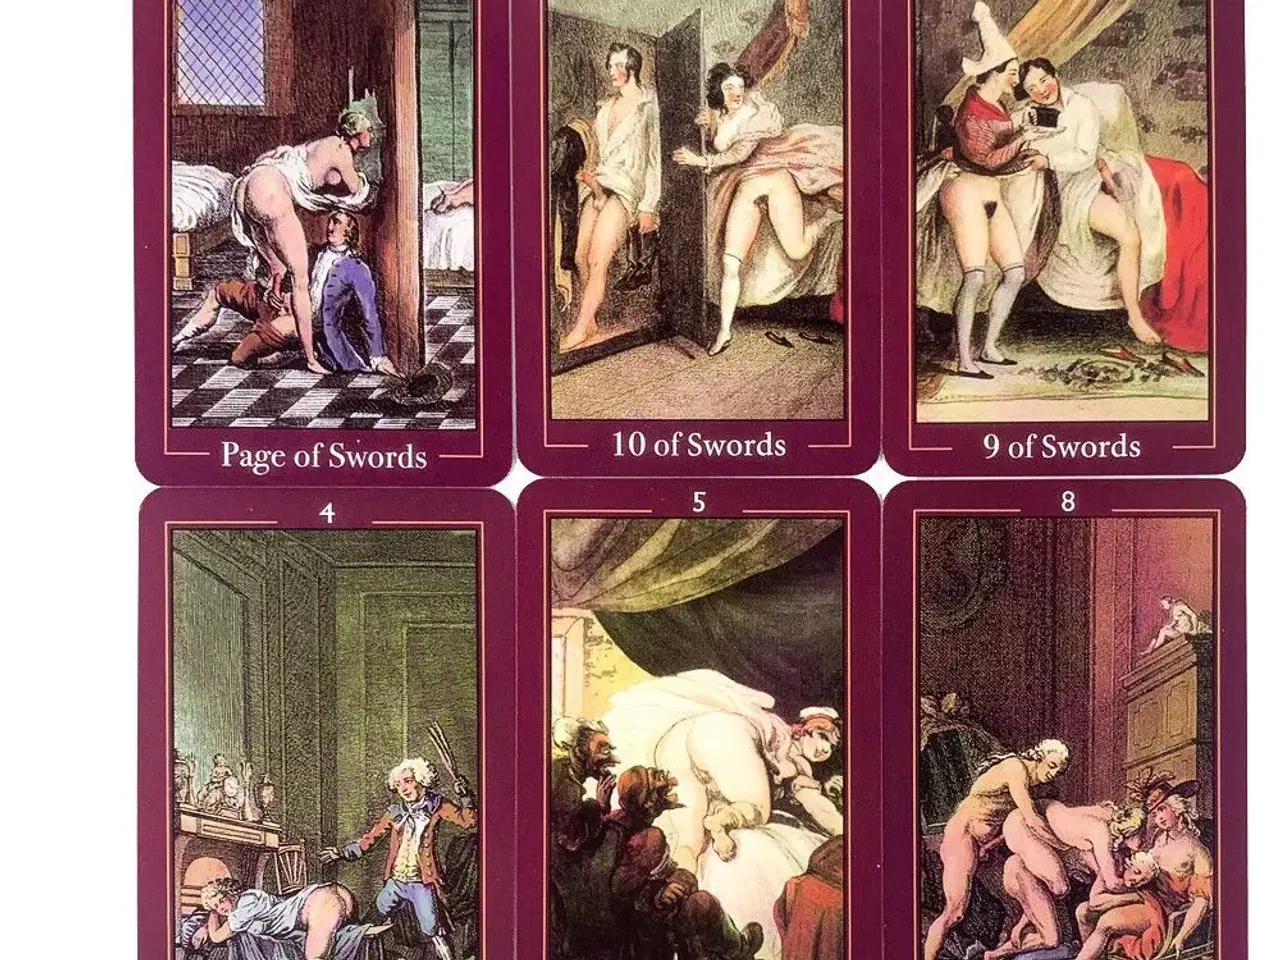 Billede 7 - Tarot kort med erotiske tegninger